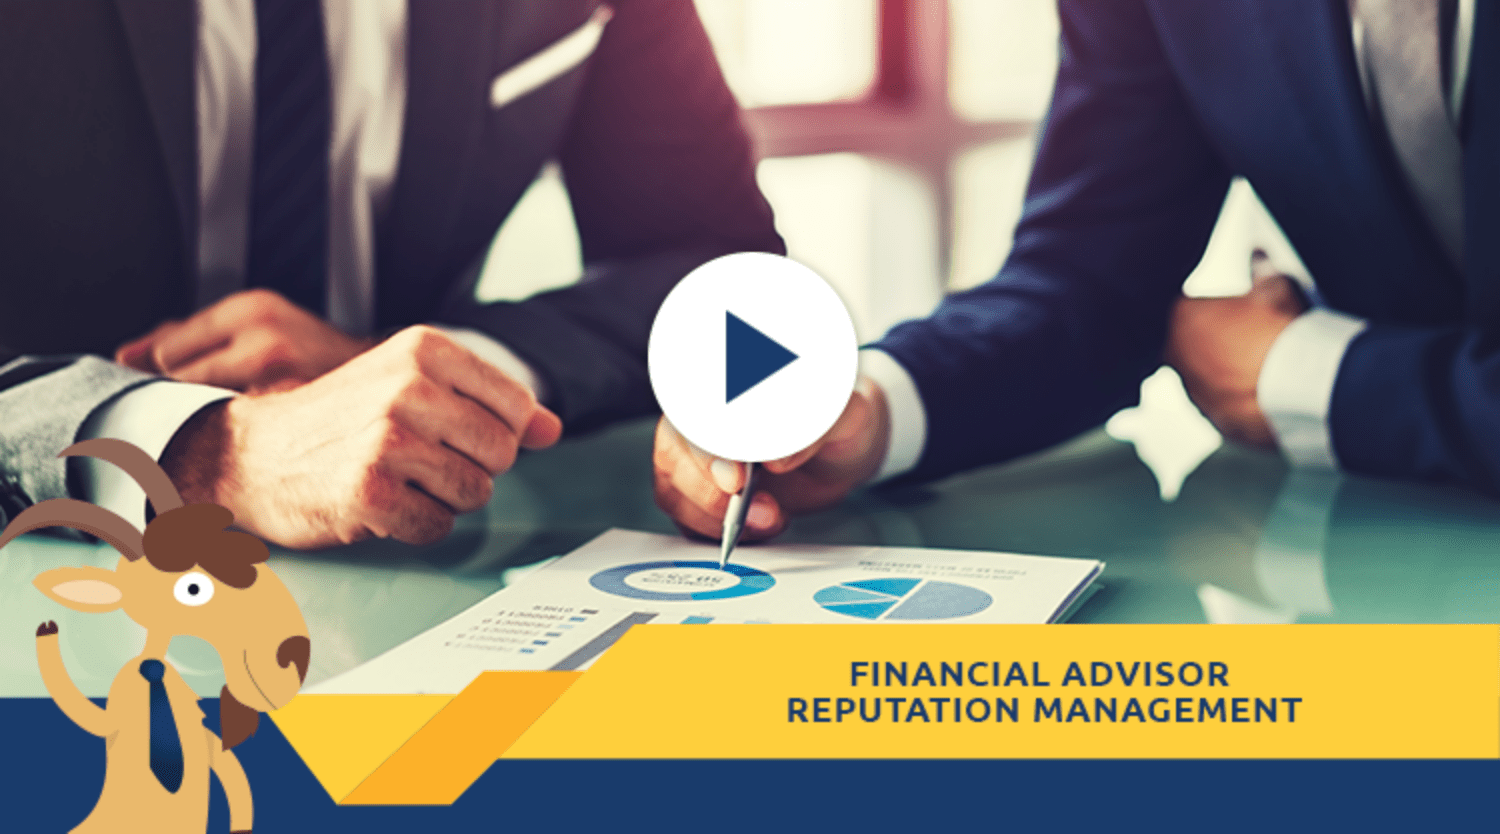 Online Reputation Management for Financial Advisors